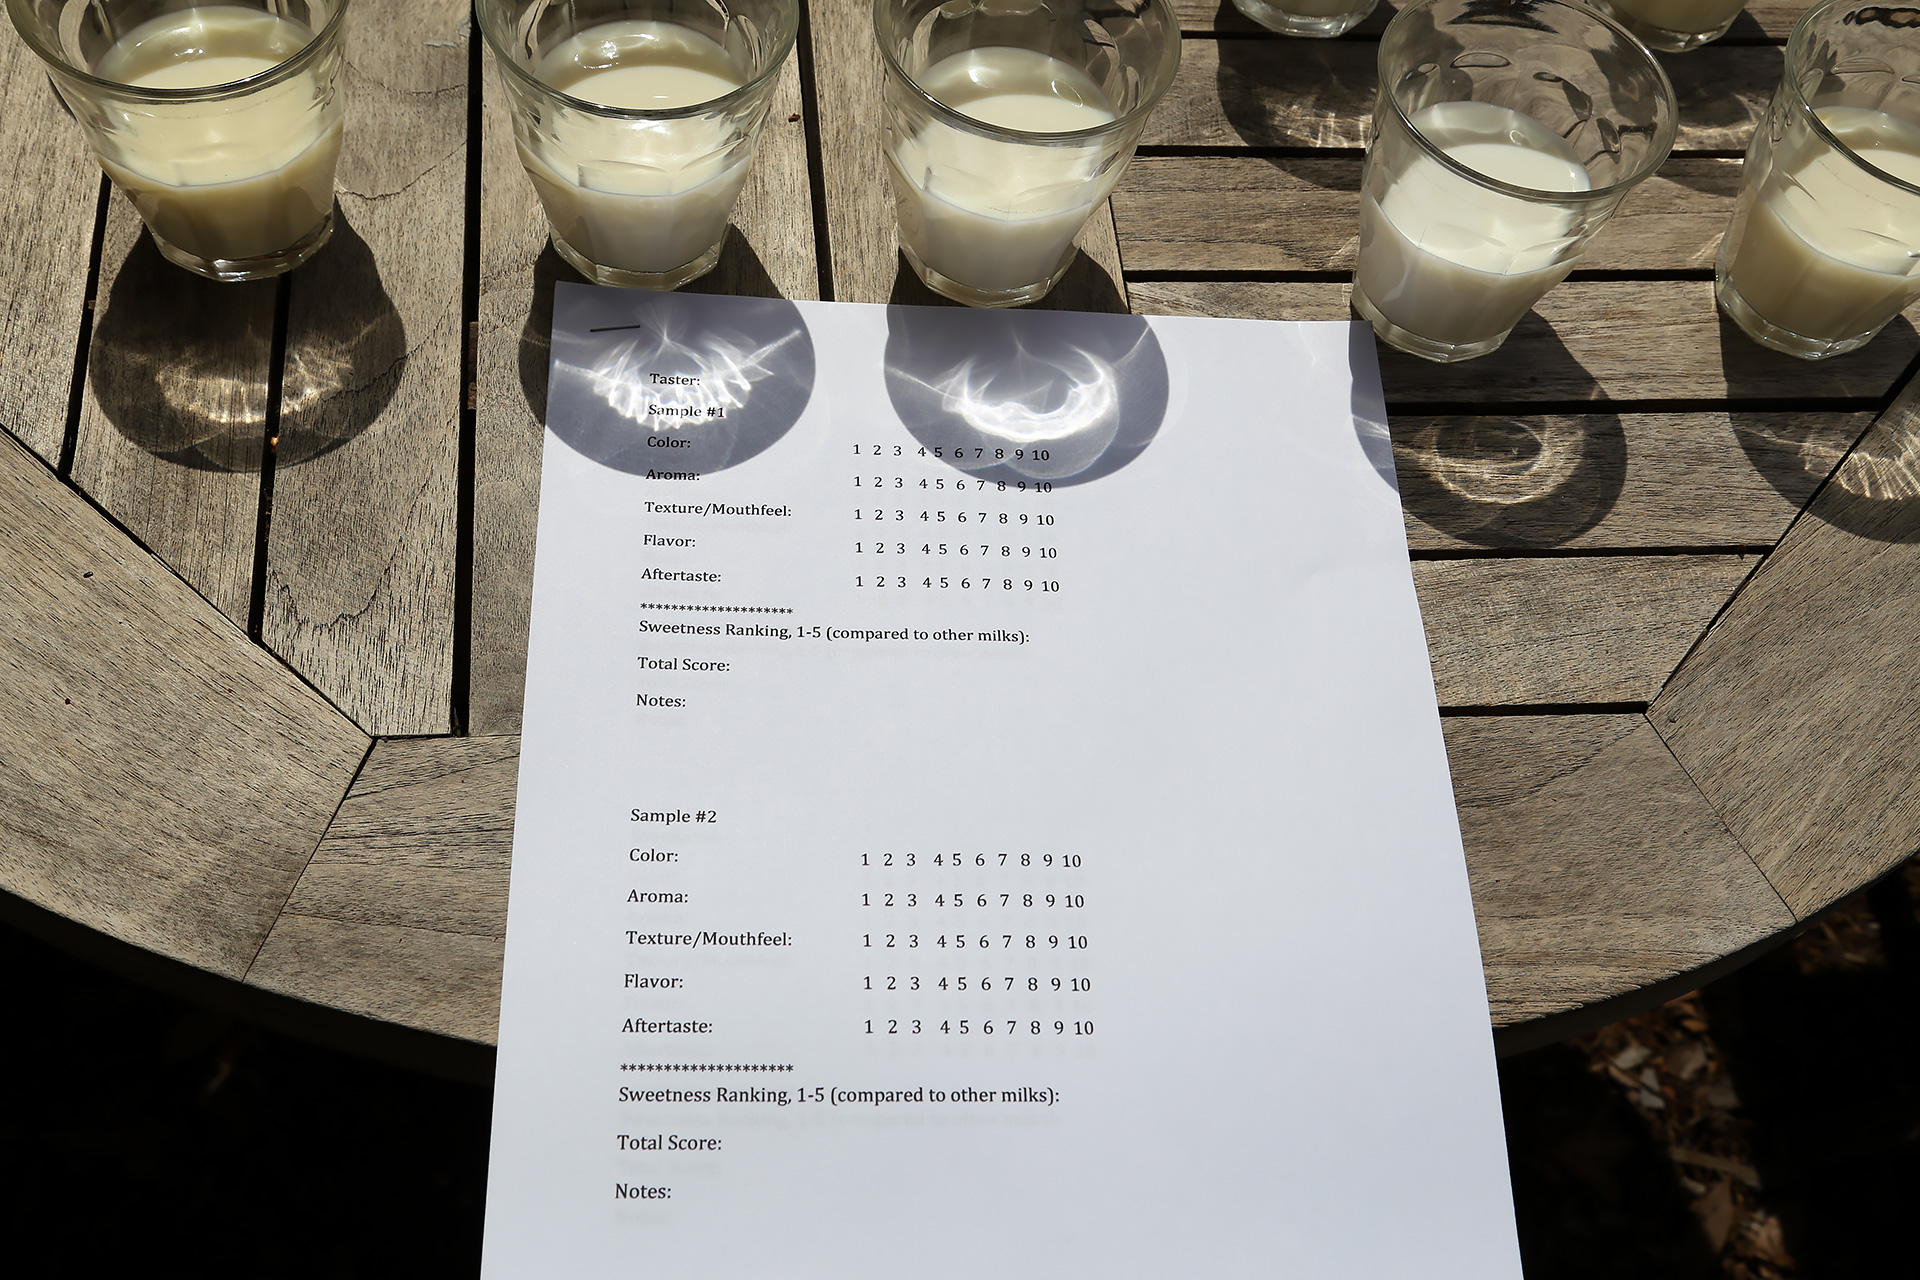 The milk rating system for the taste test